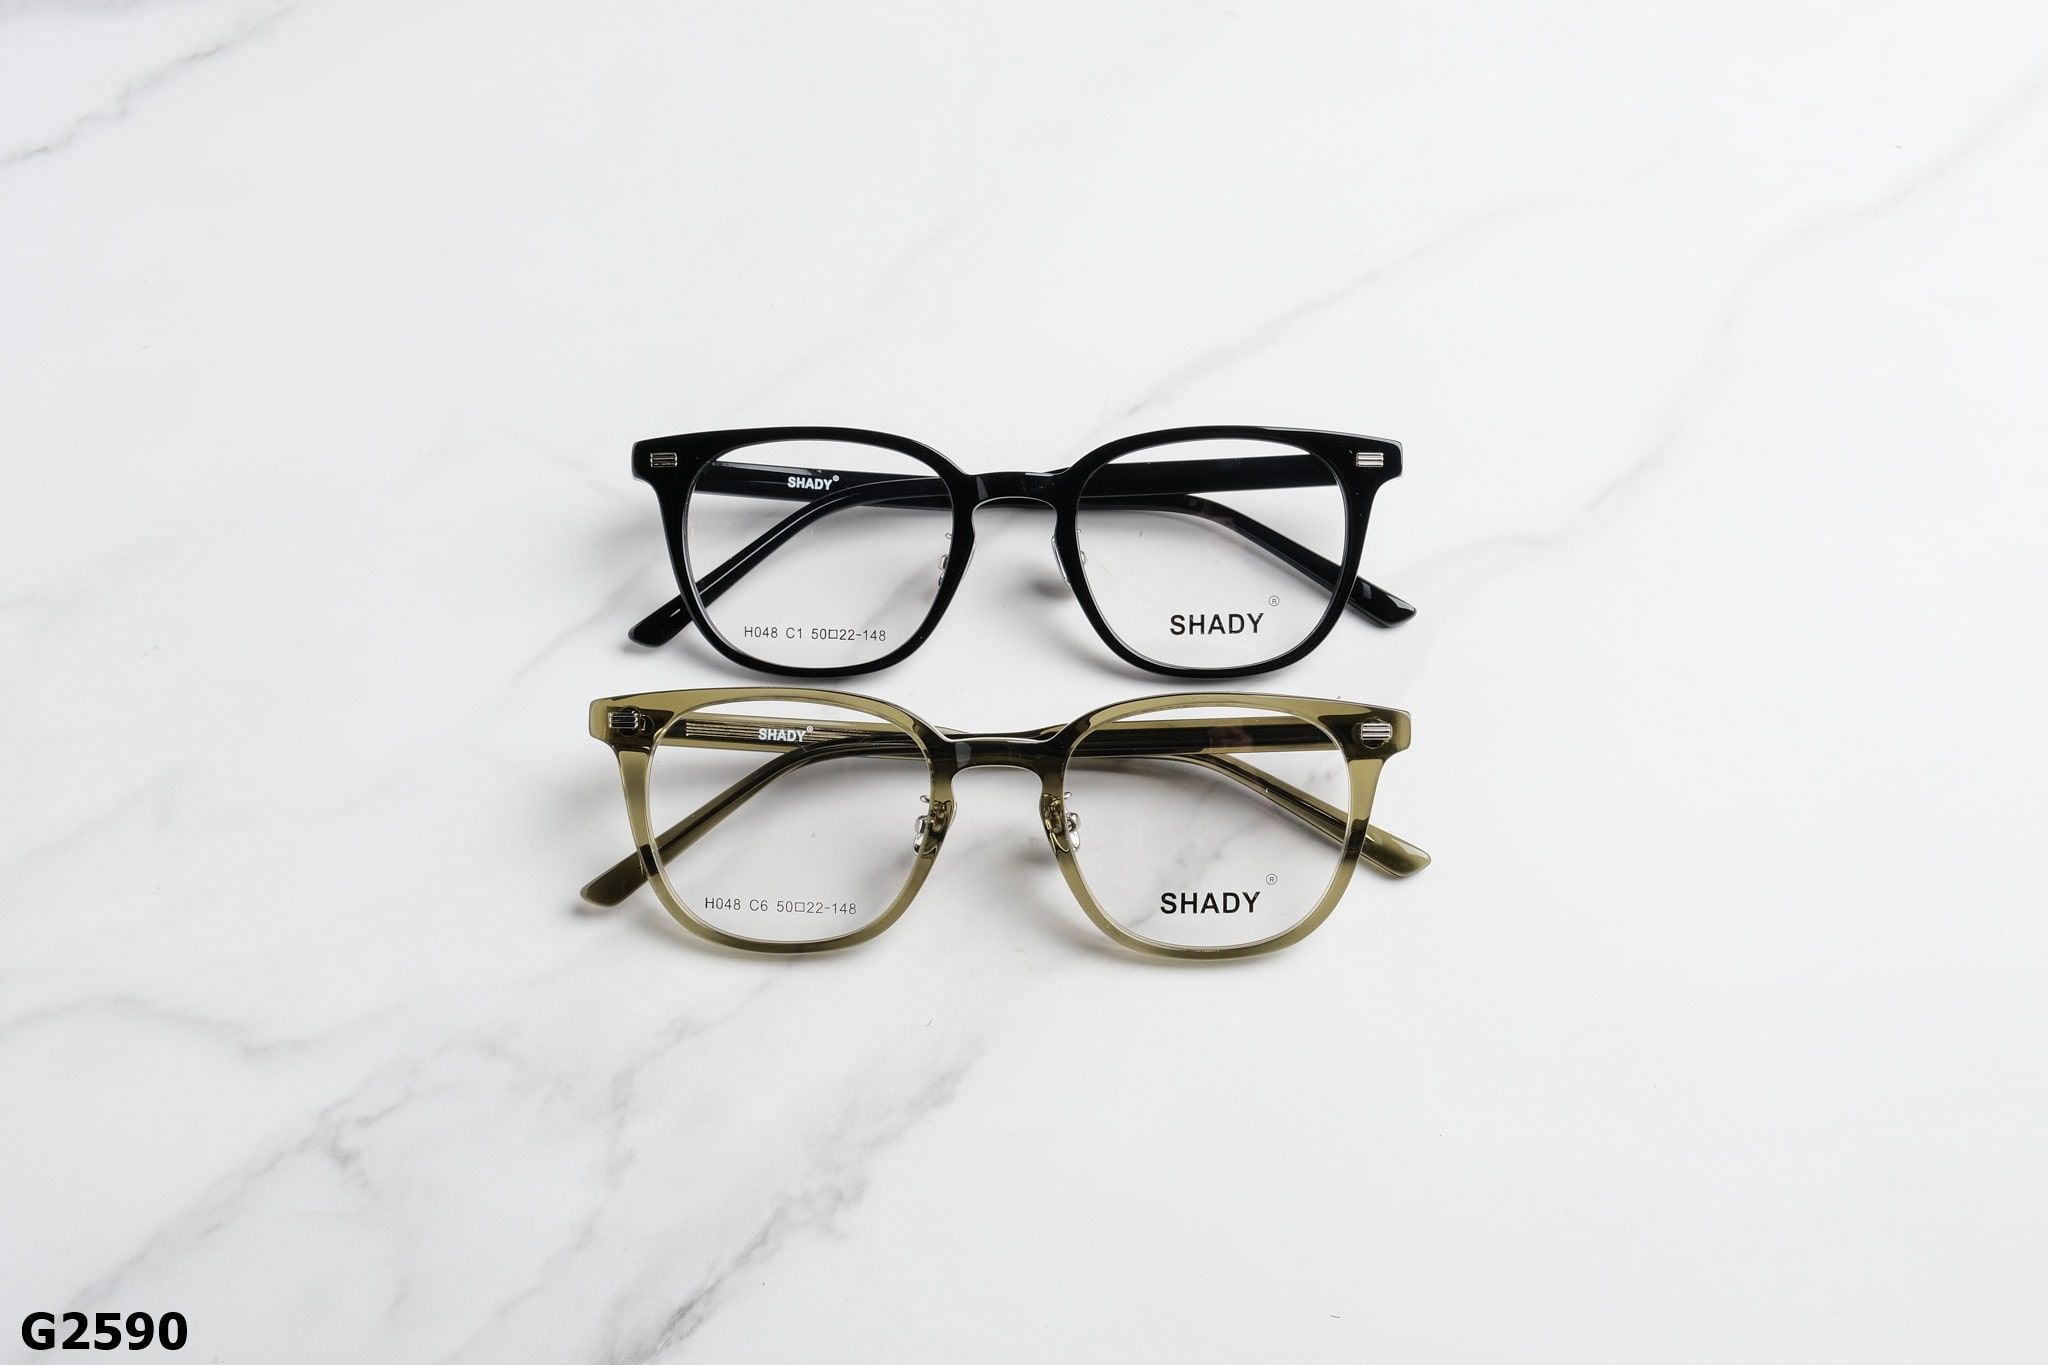  SHADY Eyewear - Glasses - G2590 